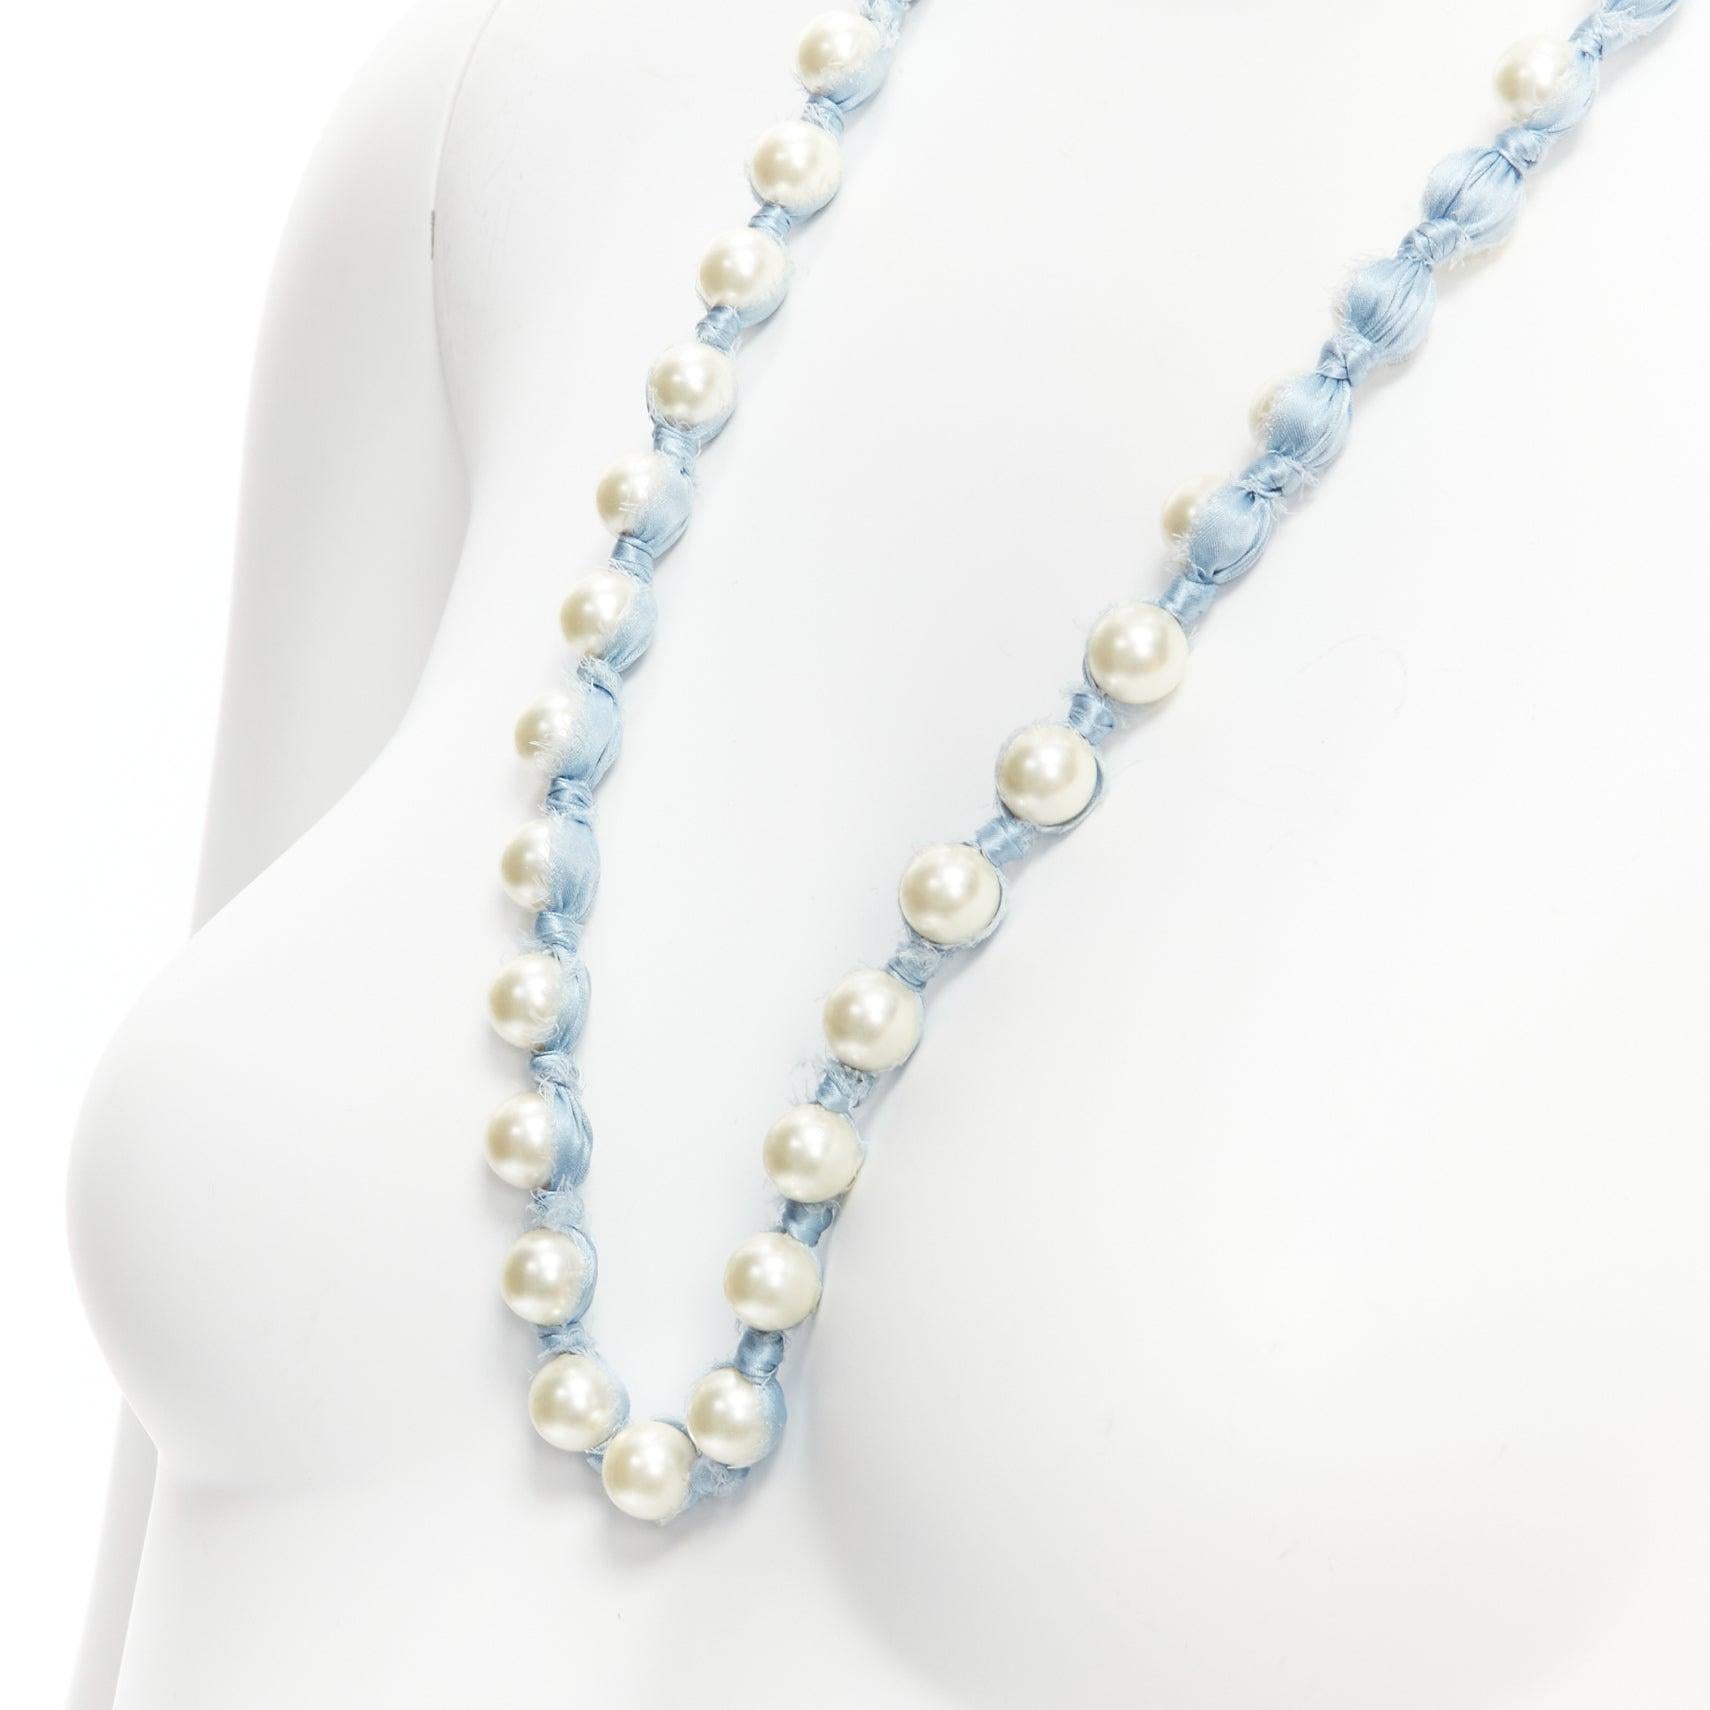 LANVIN ALBER ELBAZ cream pearl blue silk ribbon wrap long necklace
Reference: SNKO/A00340
Brand: Lanvin
Designer: Alber Elbaz
Material: Faux Pearl, Silk
Color: Blue, Pearl
Pattern: Solid
Closure: Self Tie

CONDITION:
Condition: Excellent, this item